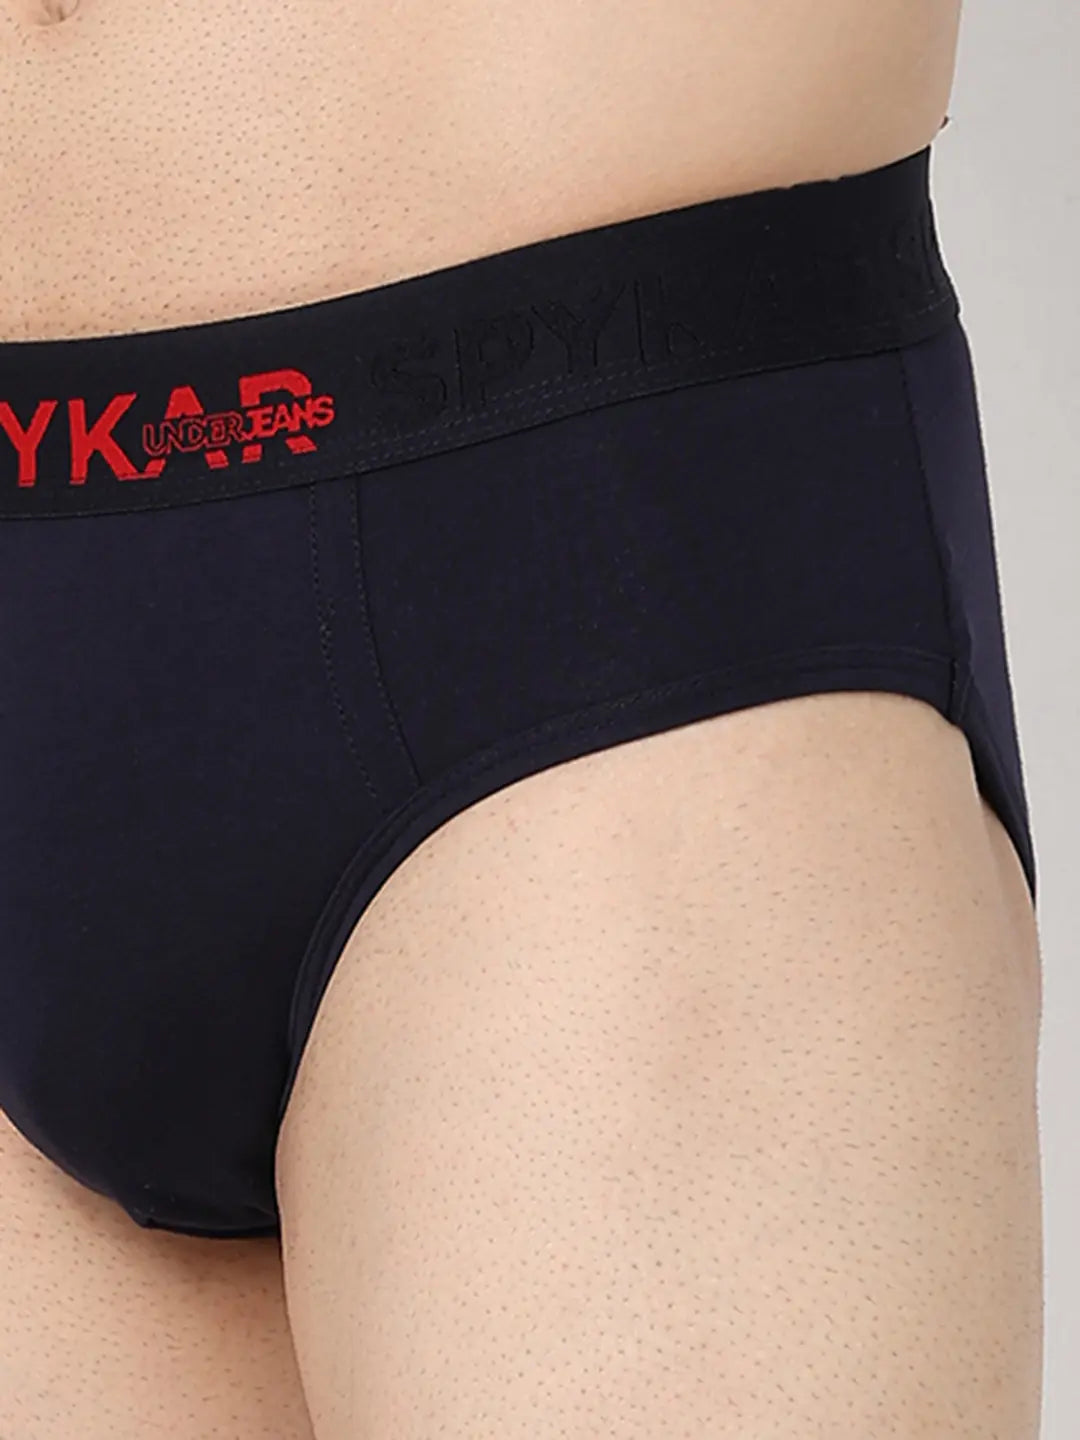 Underjeans by Spykar Men Premium Navy & Olive Cotton Blend Regular Fit Brief - Pack Of 2